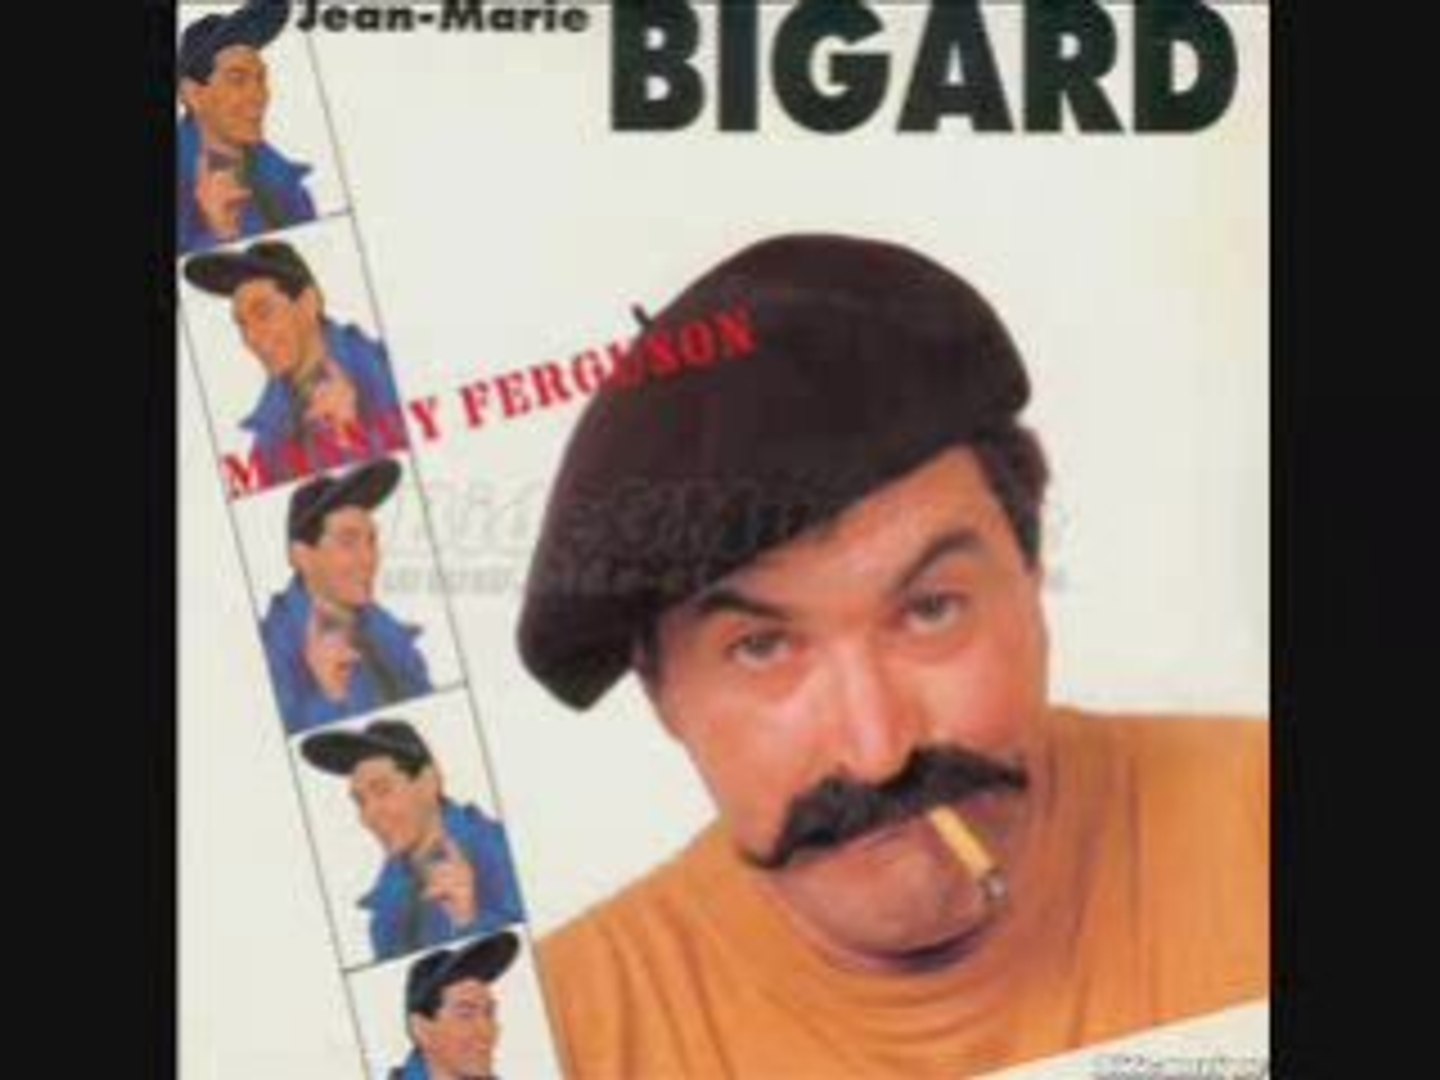 Jean Marie Bigard - Massey ferguson (1988) - Vidéo Dailymotion